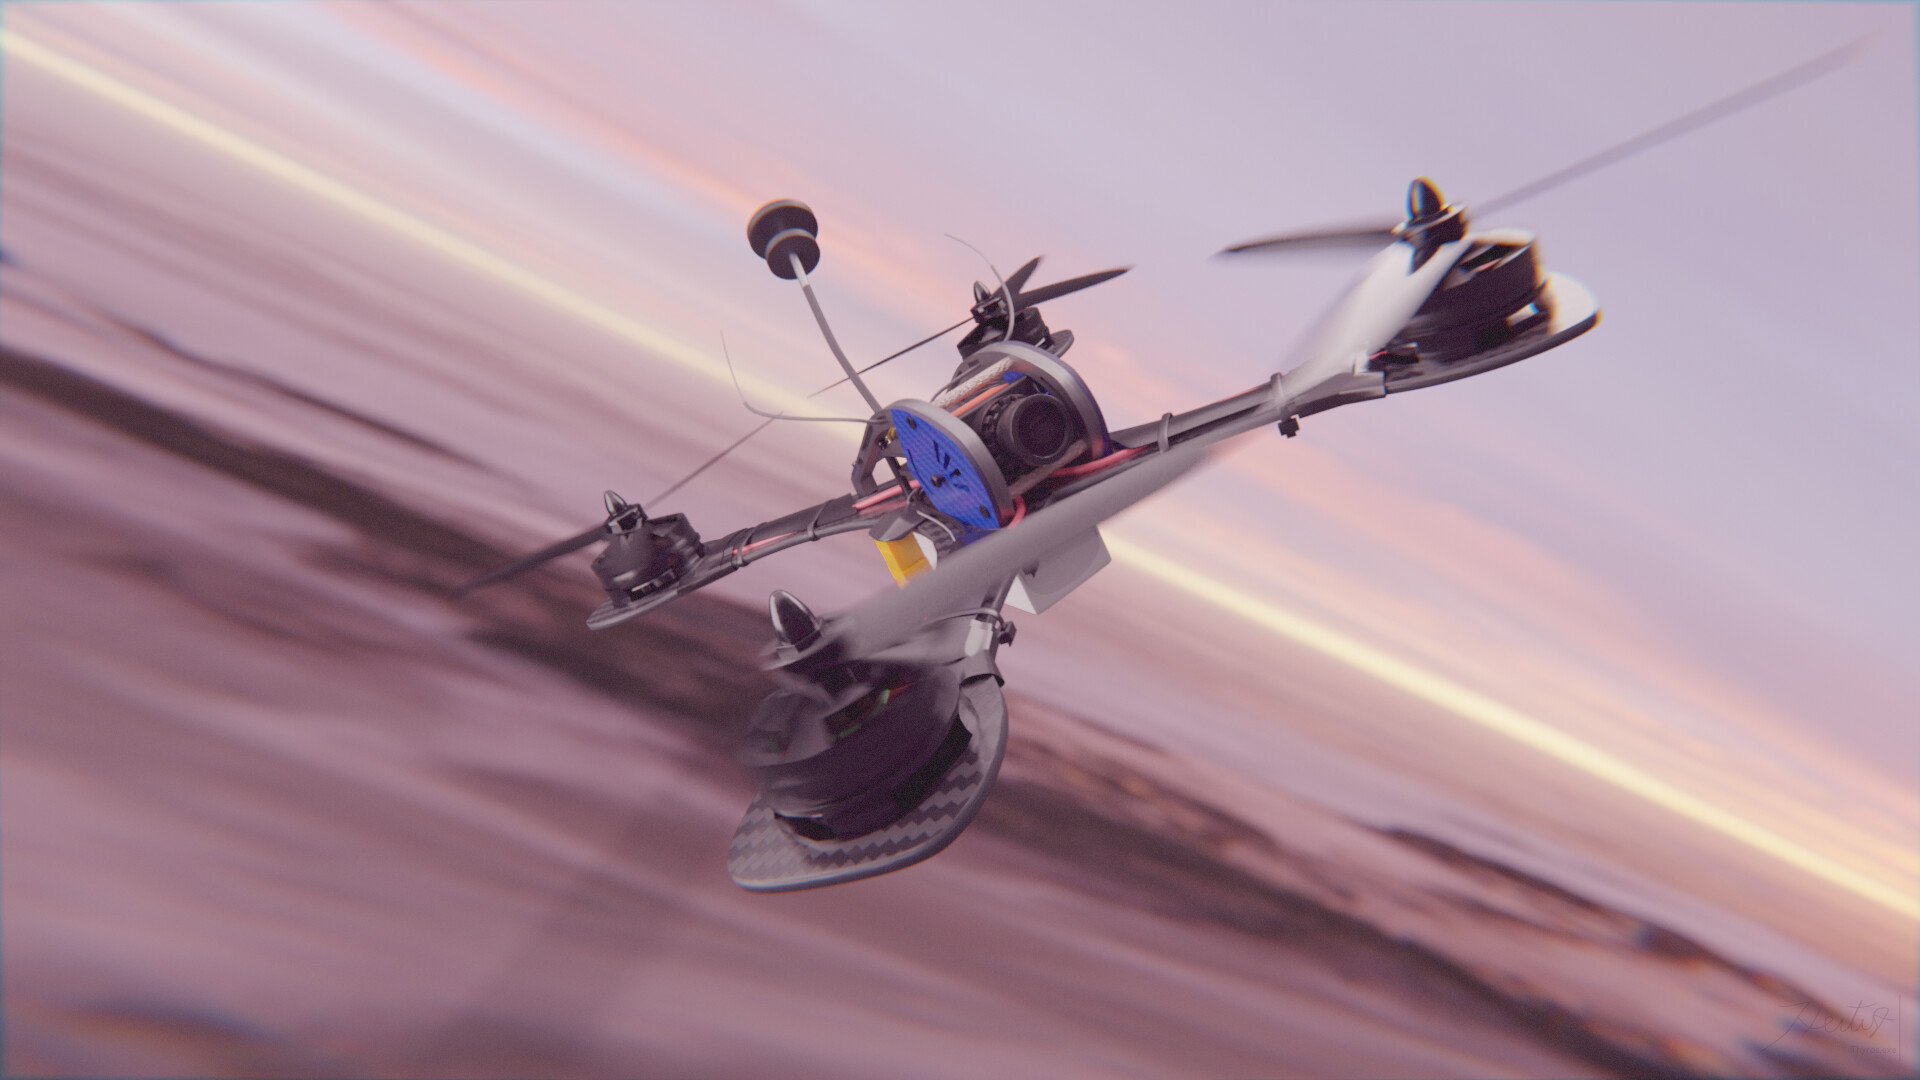 Realitic Racing Drone, Johannes Hartig